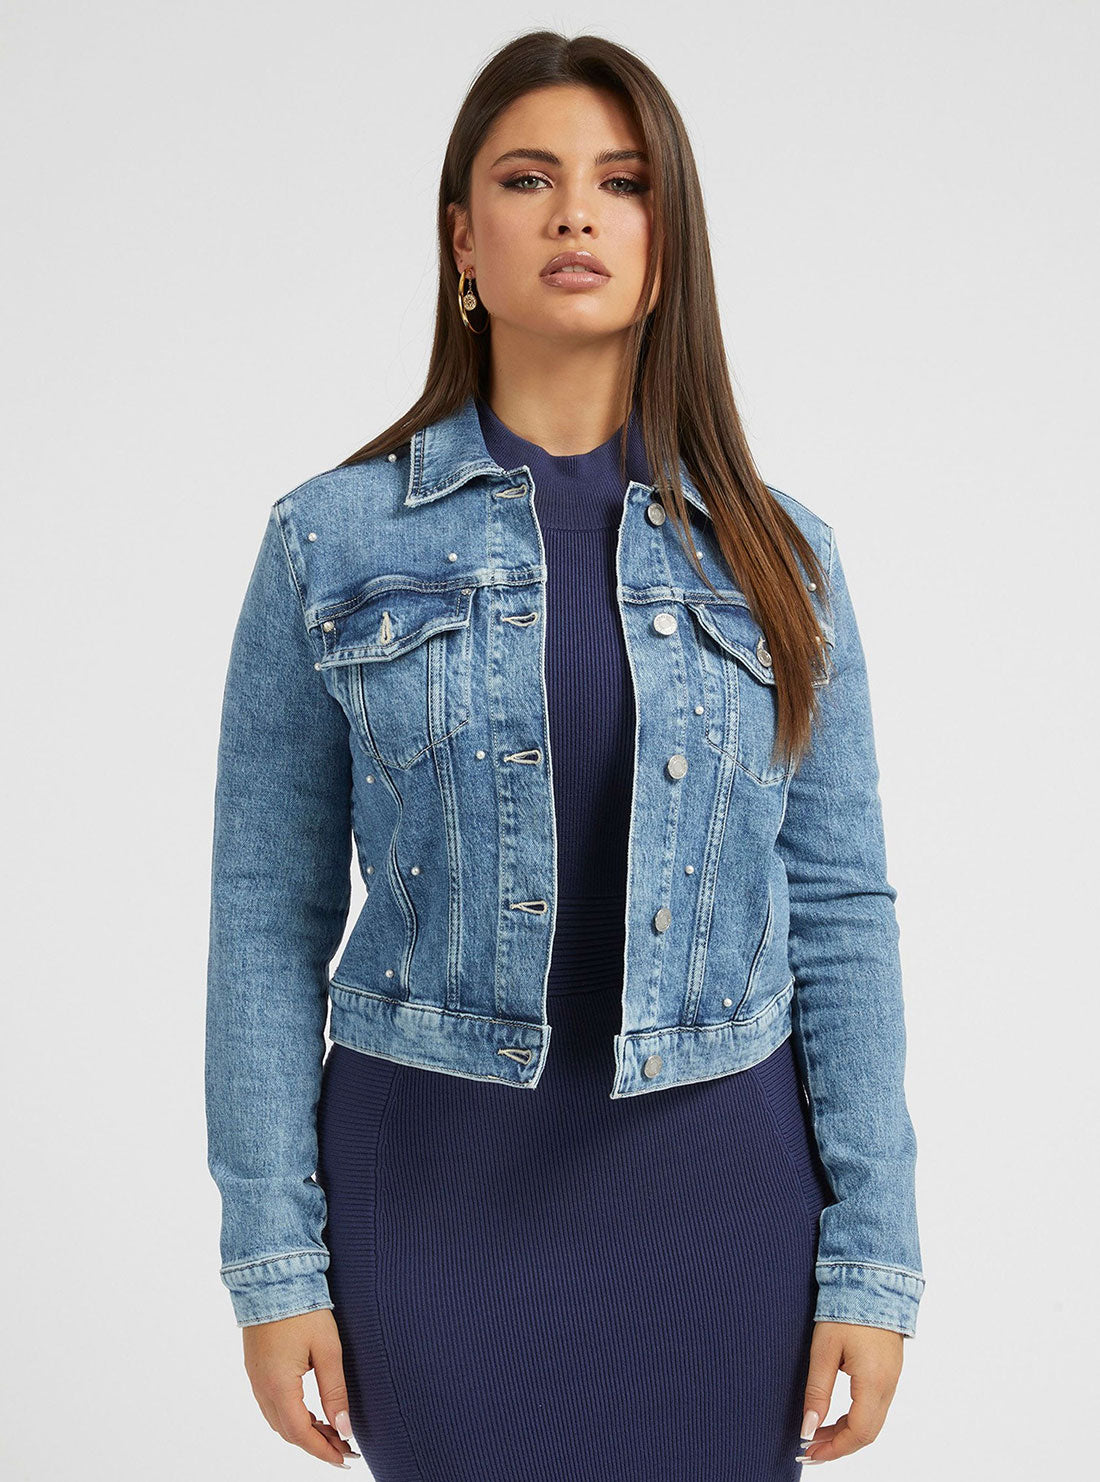 Blue Adoria Denim Jacket | GUESS Women's | Front view